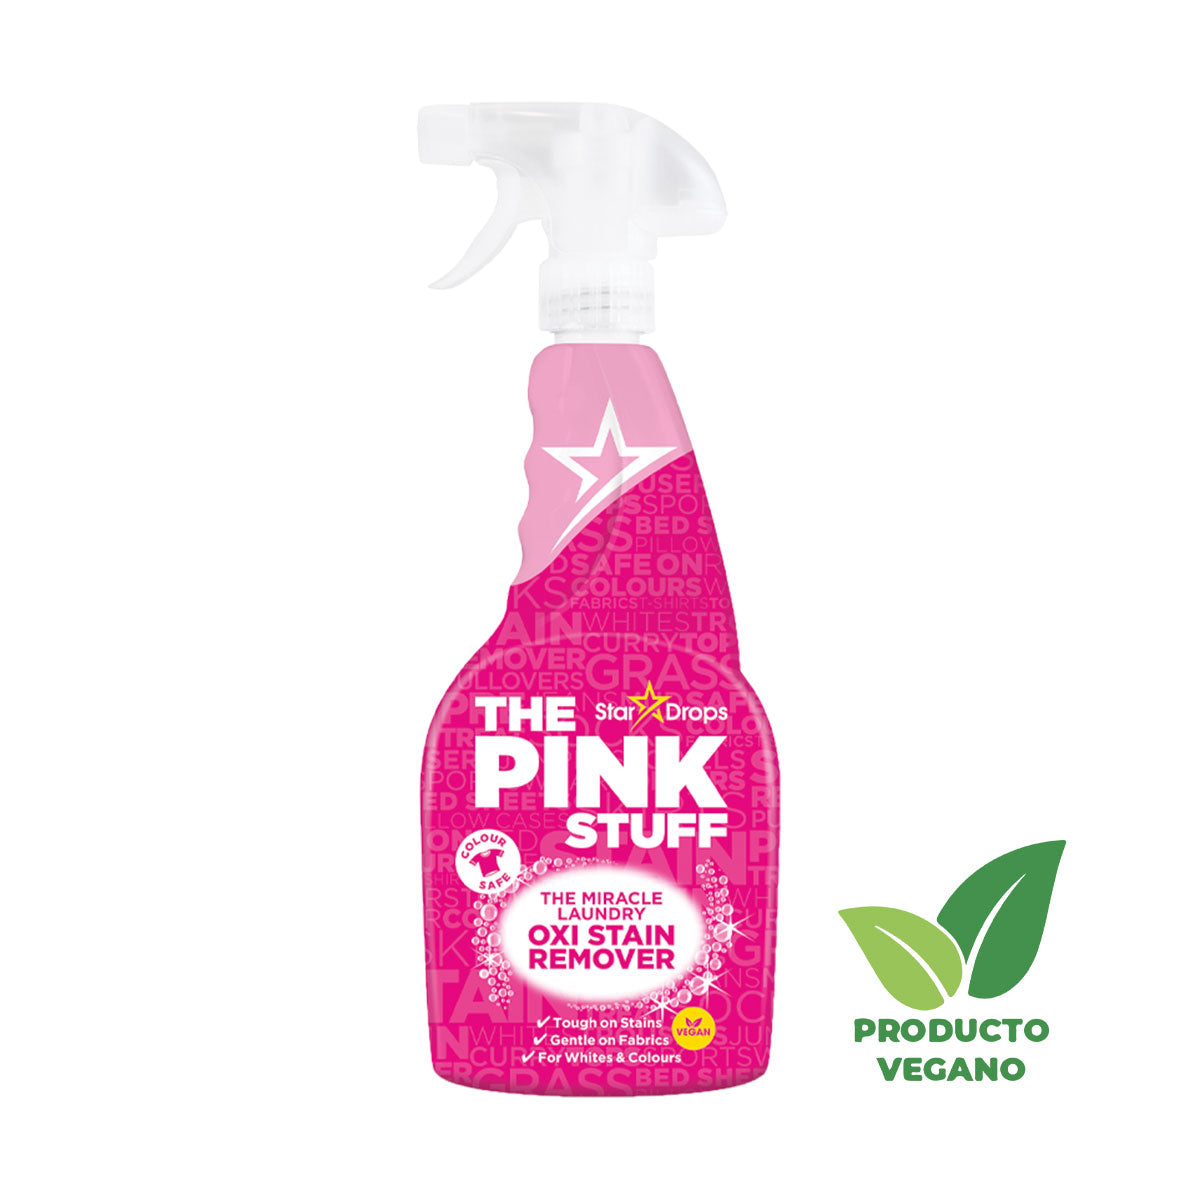 El Quitamanchas Milagroso para Ropa OXI 500 ml The Pink Stuff - 🌱 🇬🇧 Producto Vegano del Reino Unido